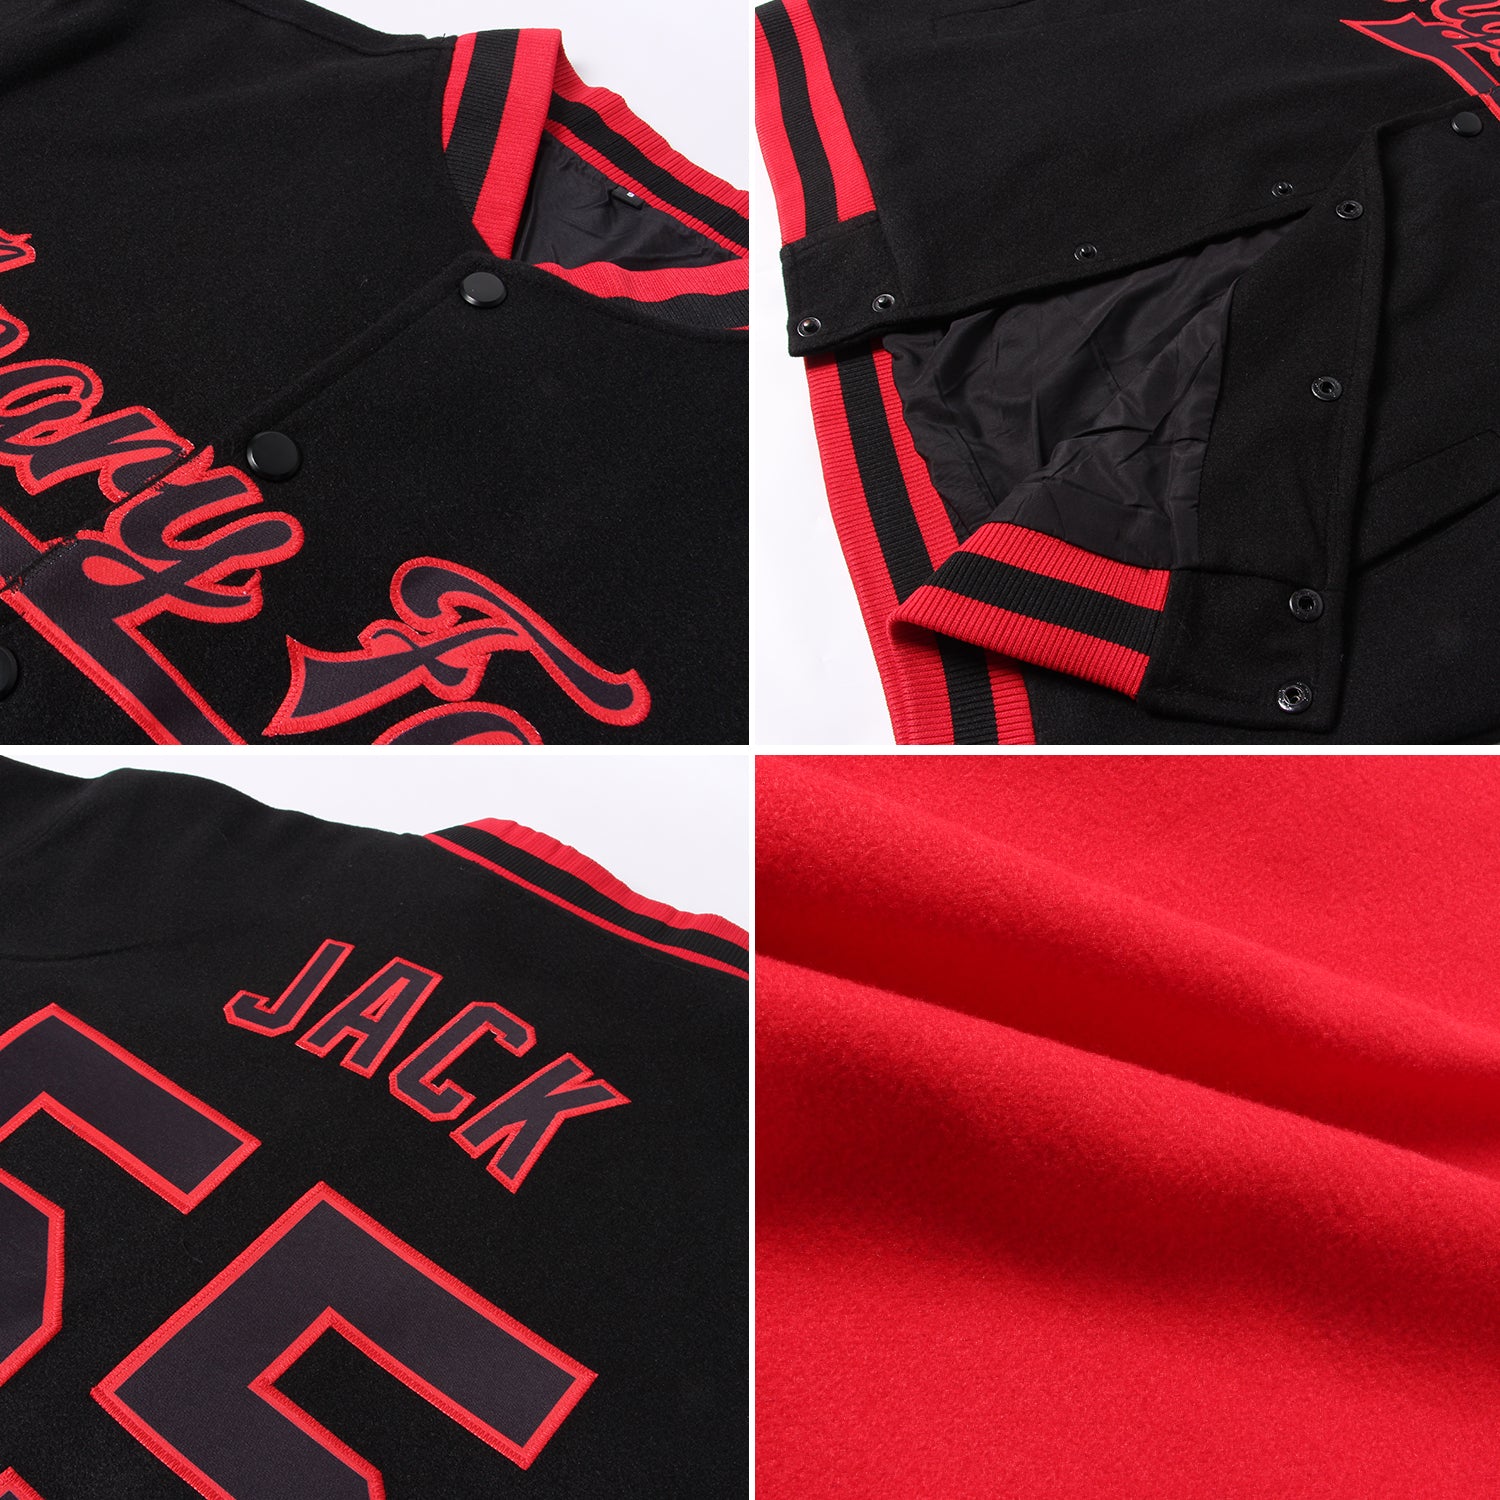 Letterman Chicago Bulls Red and White Varsity Jacket - HJacket